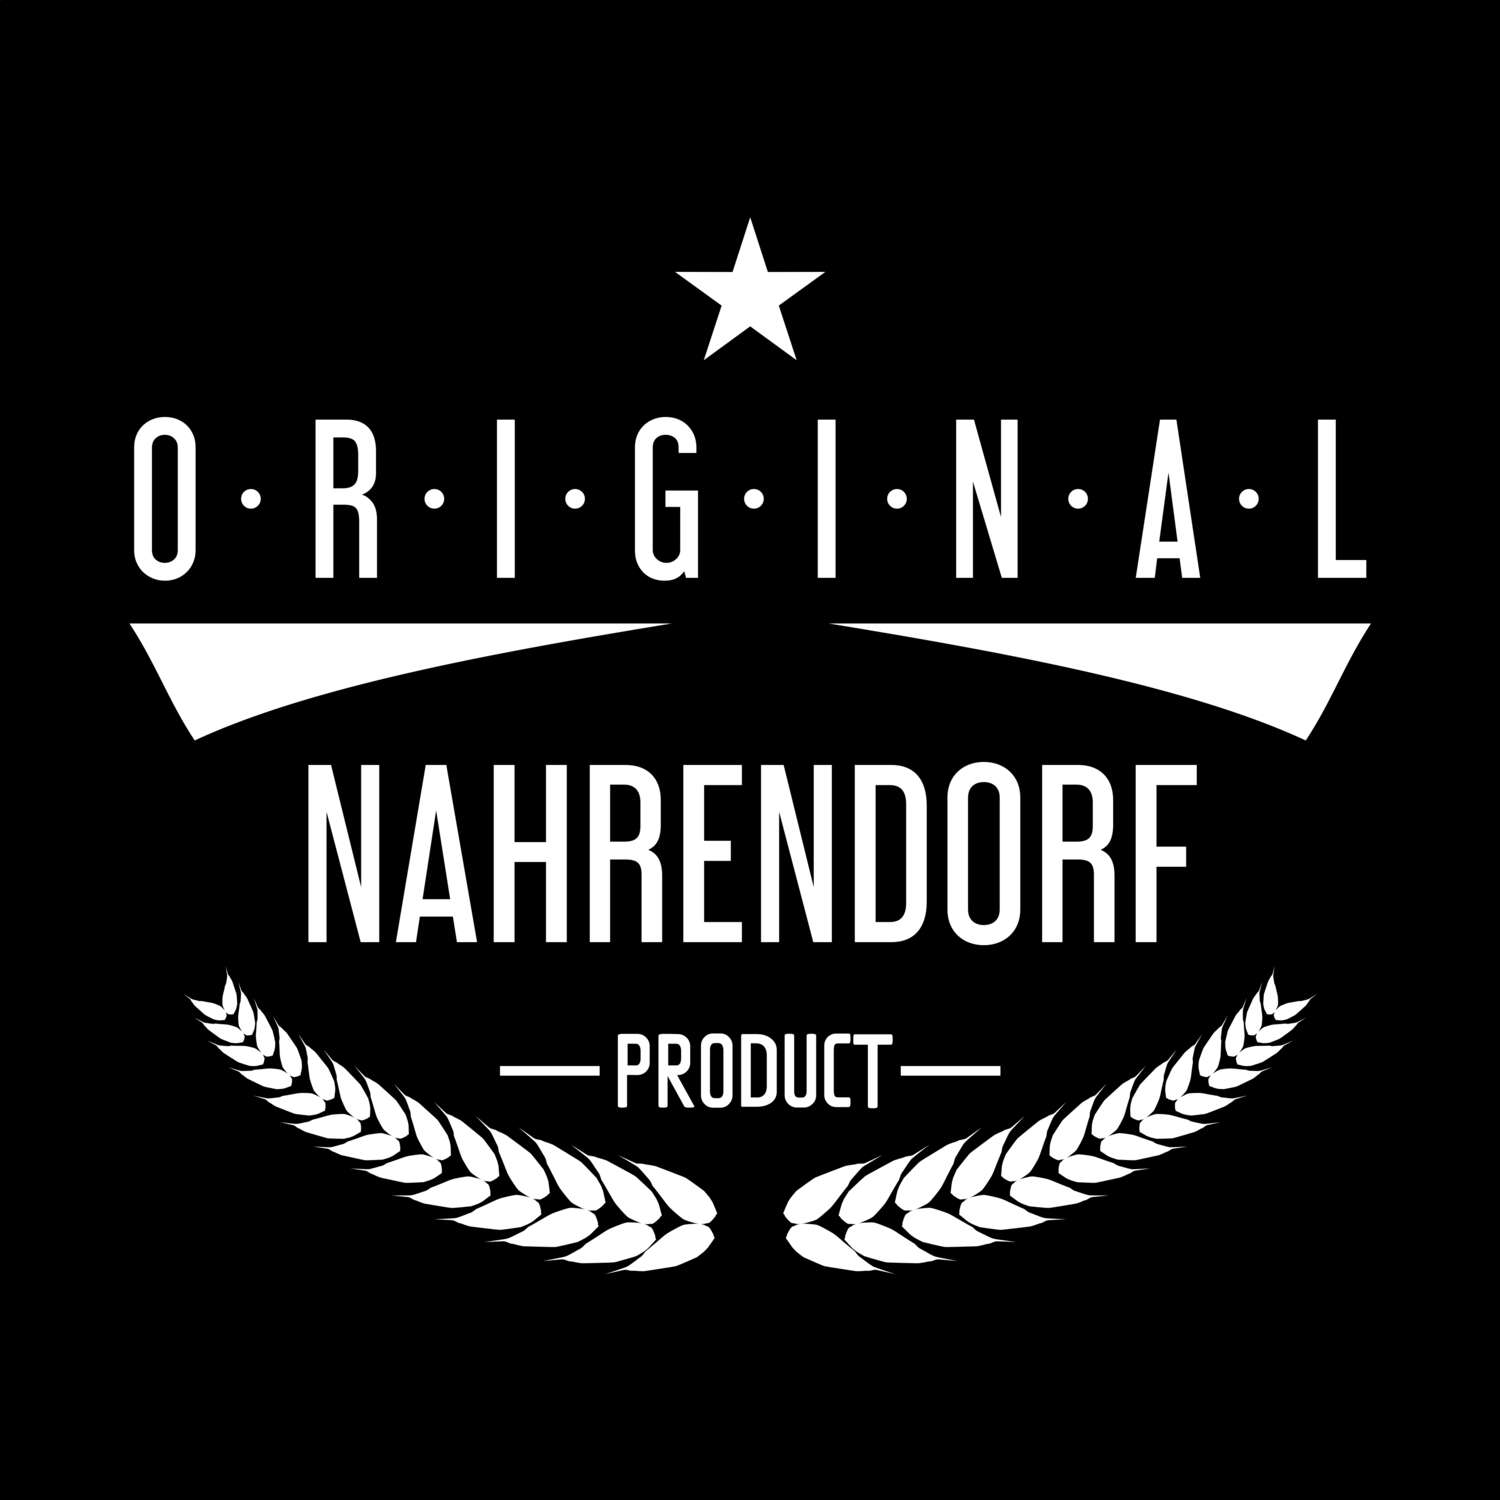 Nahrendorf T-Shirt »Original Product«